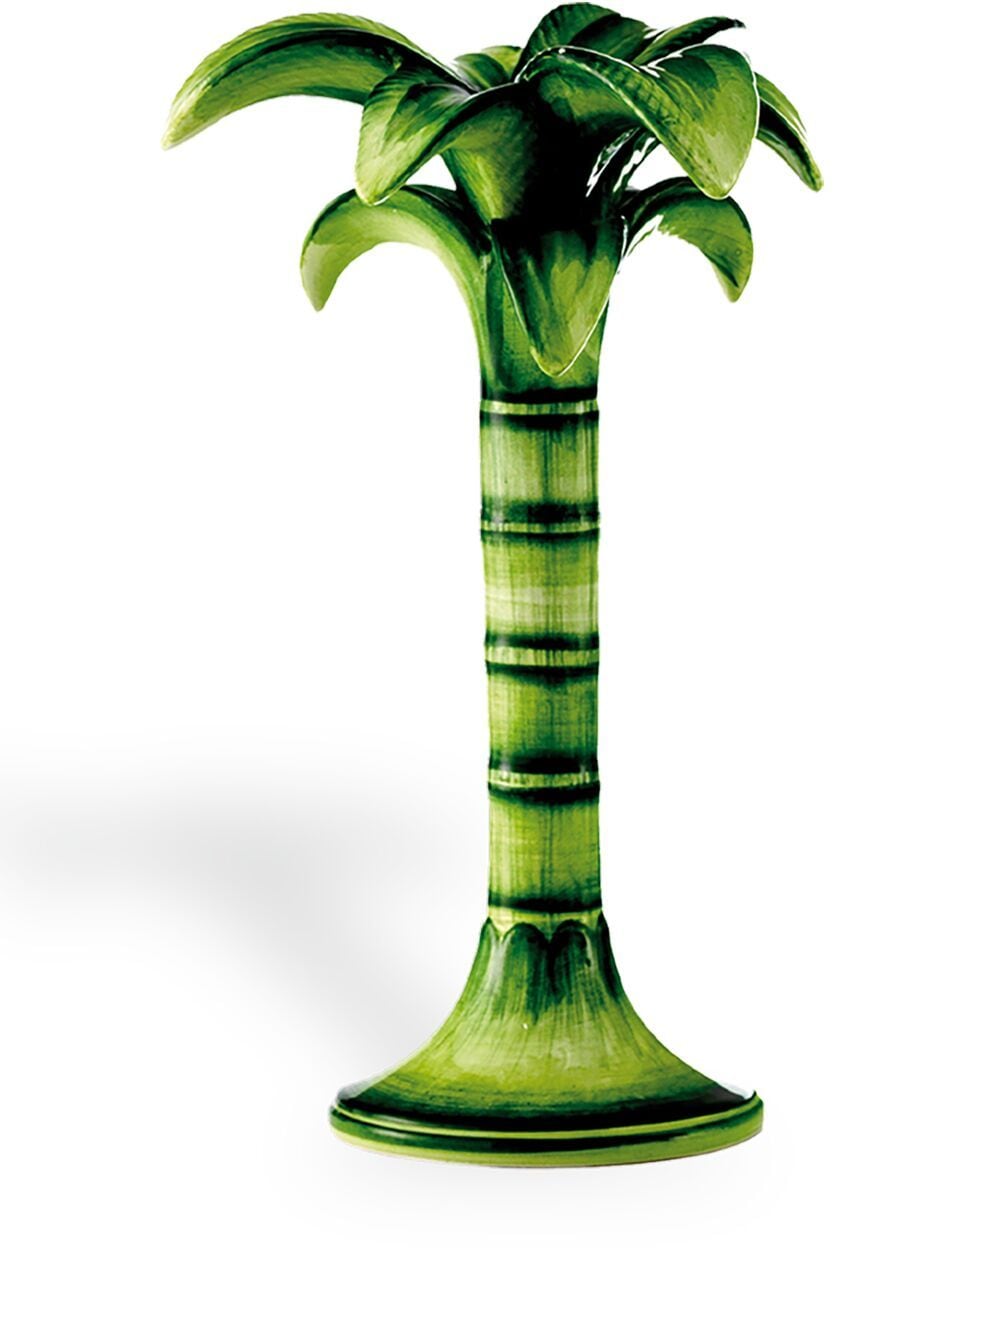 Les-Ottomans medium Palm candle holder - Green